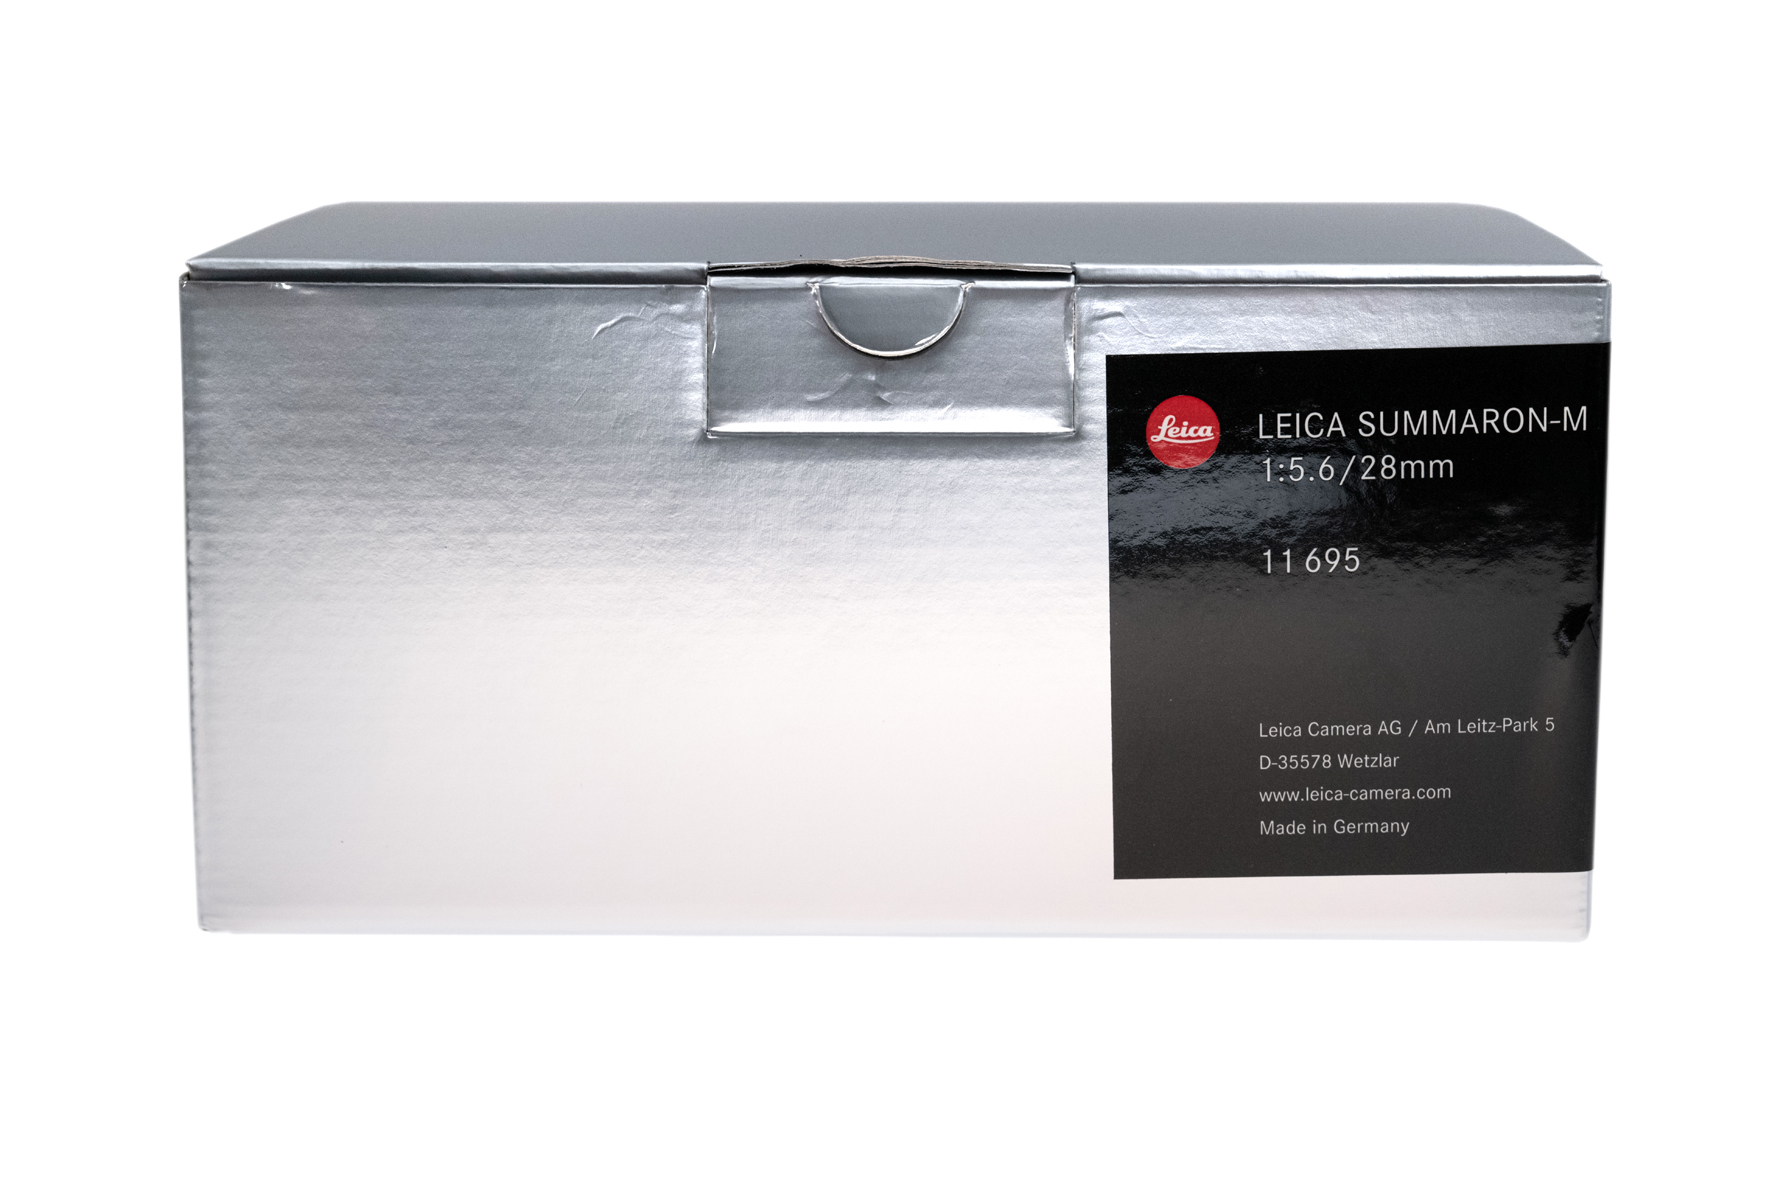 Leica Summaron-M 1:5.6/28mm, silver chrome-plated